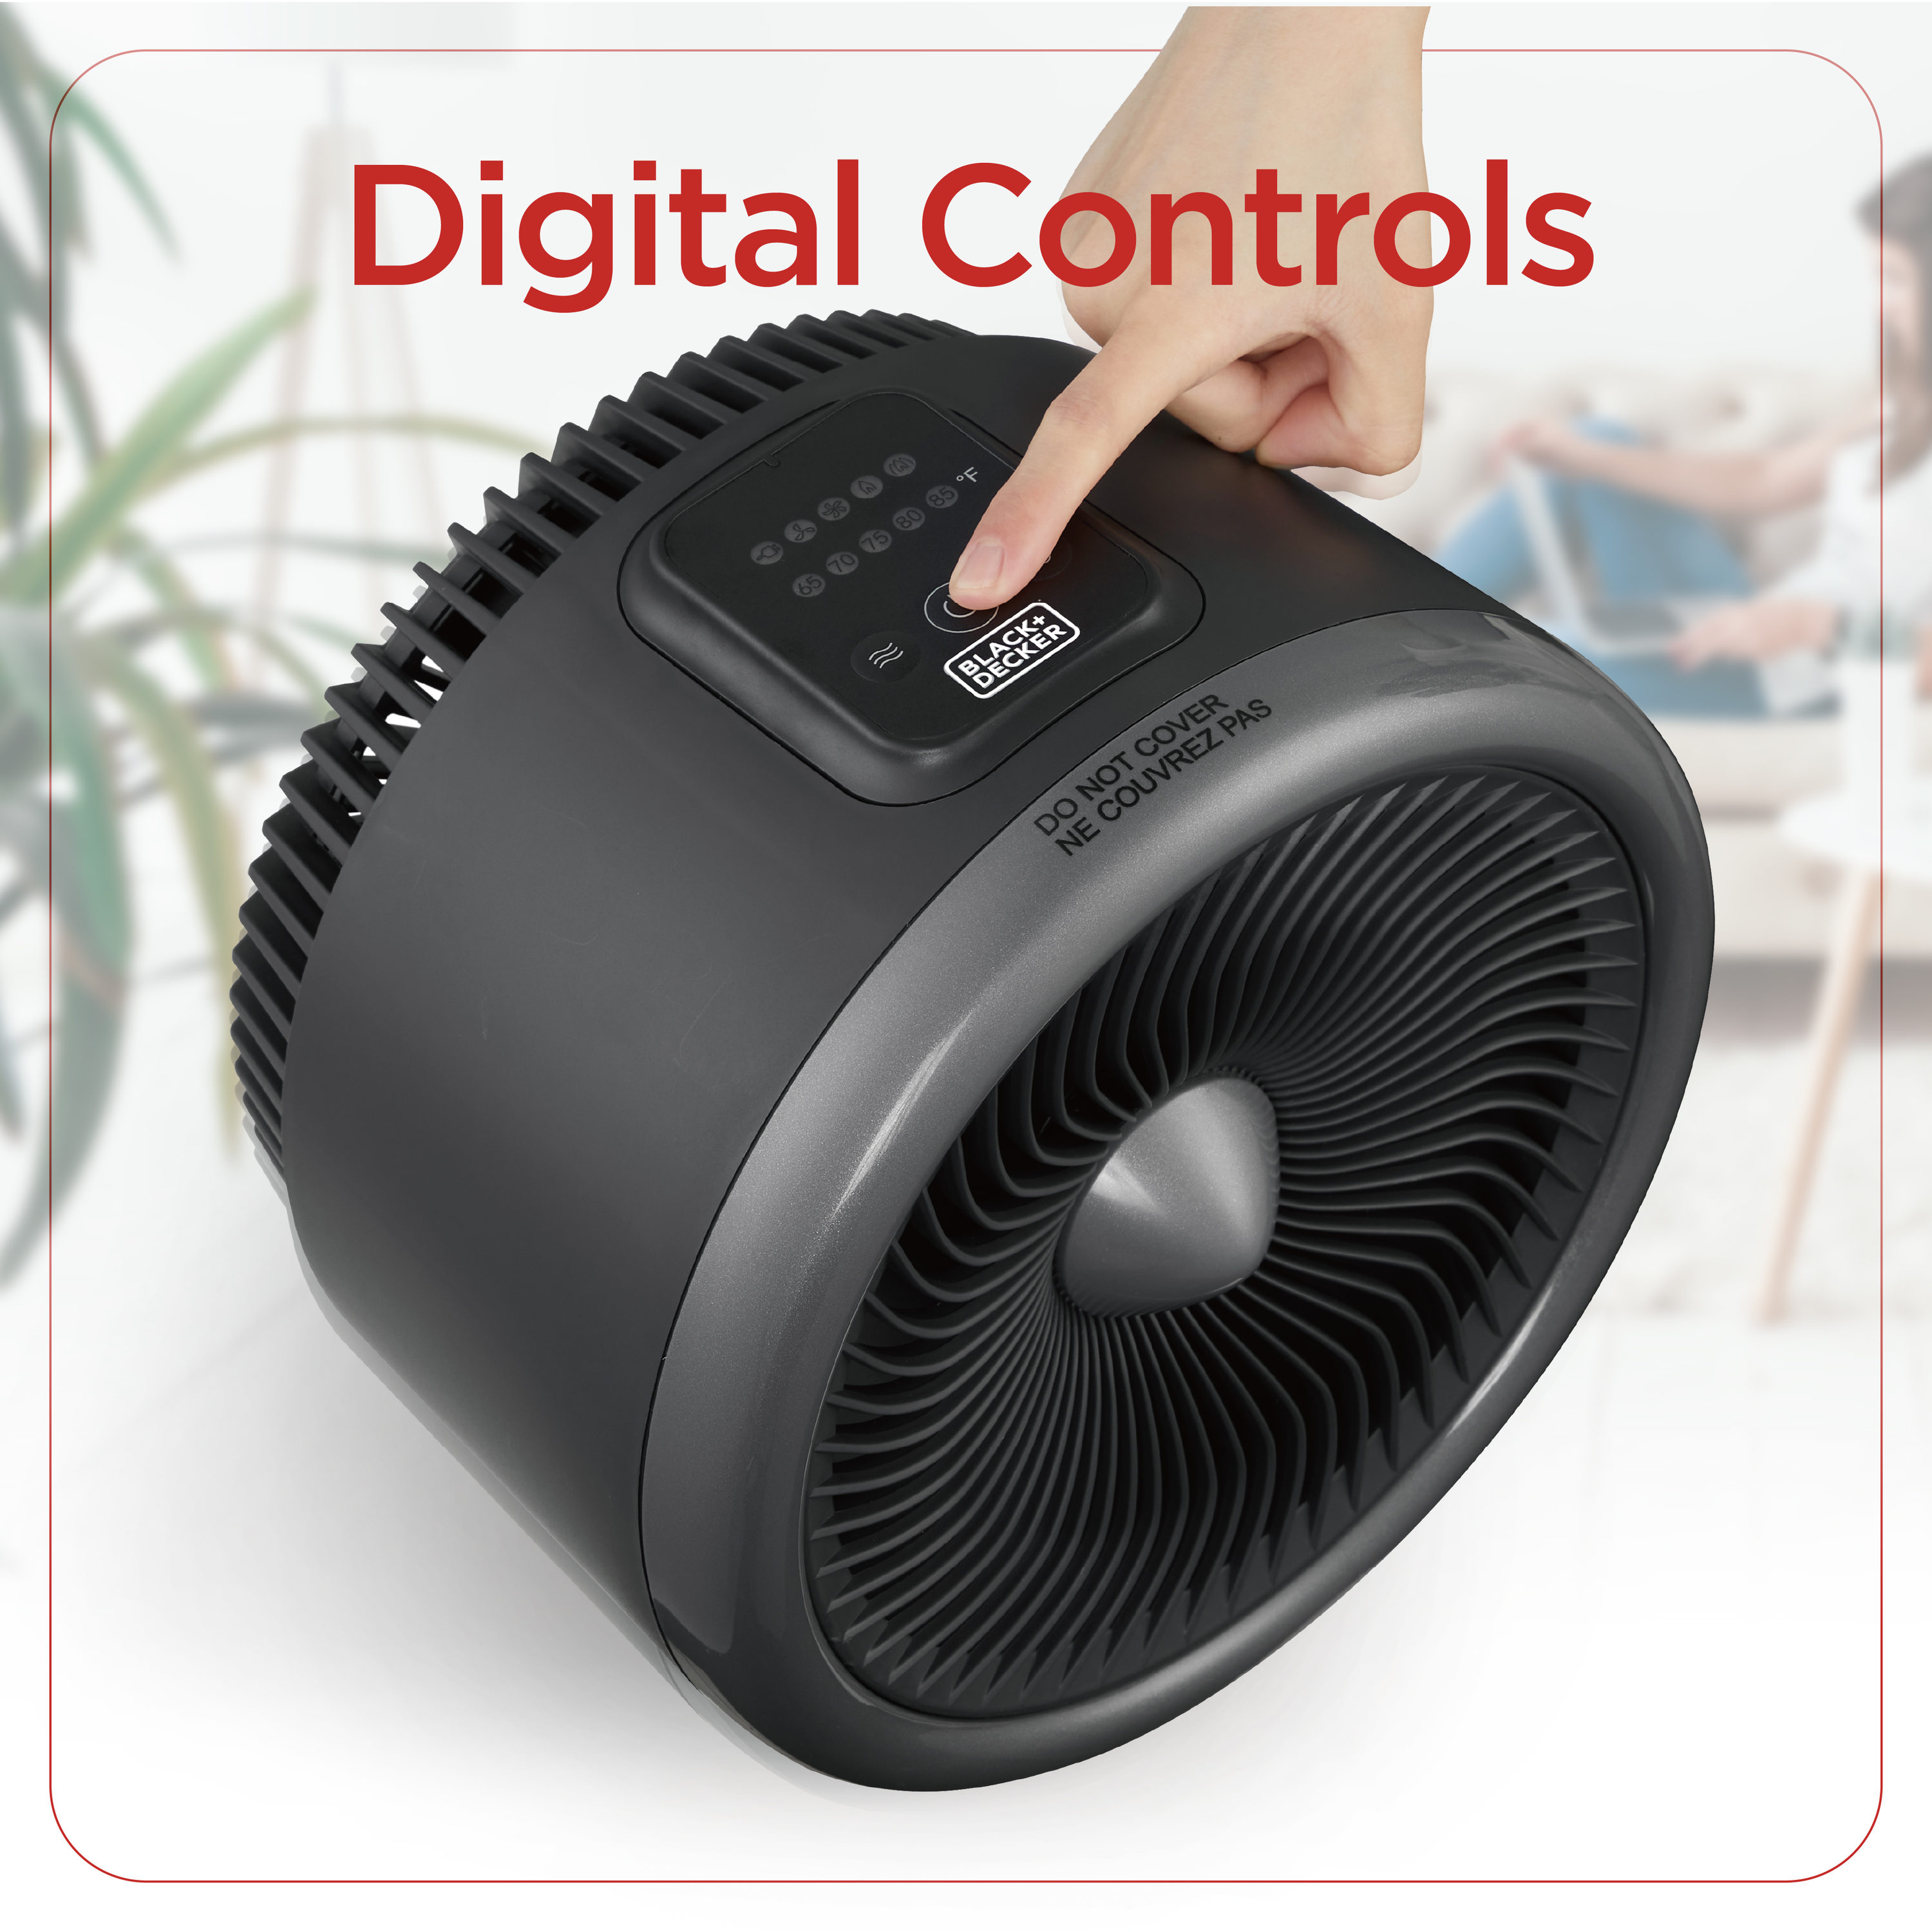 Black+decker Oscillating Digital Controls Ceramic Tower Heater